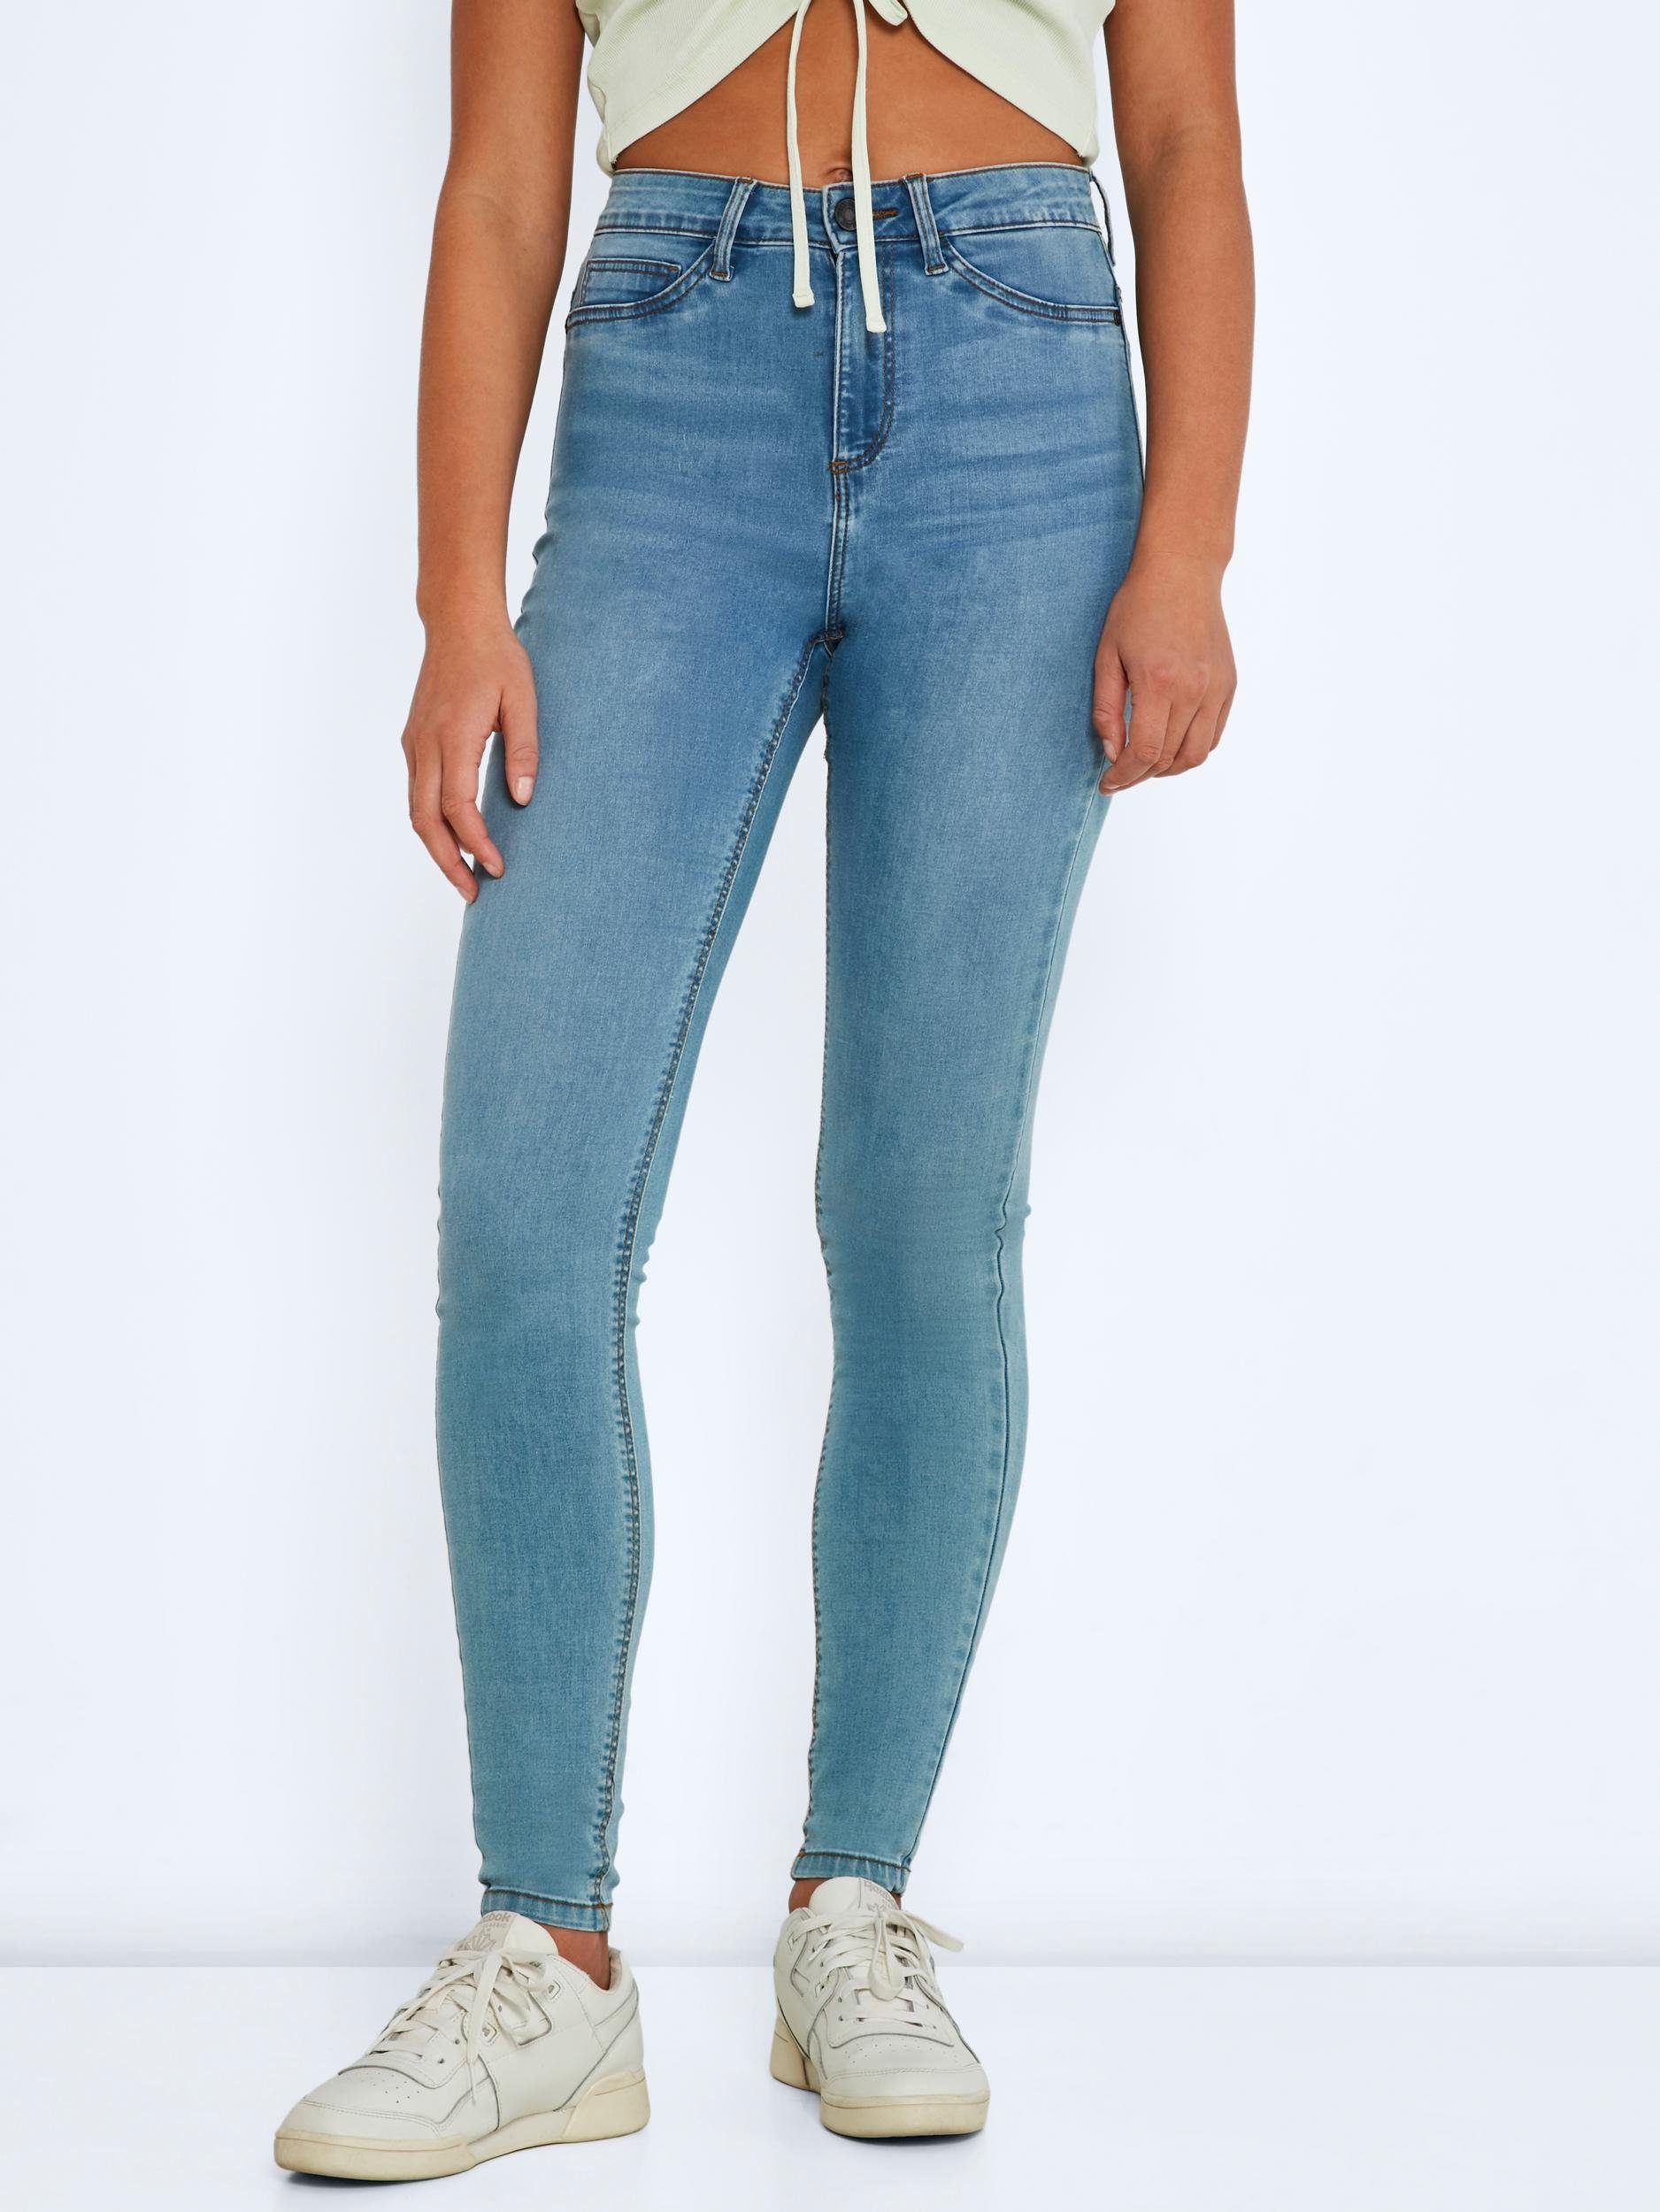 JEANS Skinny-fit-Jeans may NMCALLIE VI059LB HW Noisy SKINNY NOOS